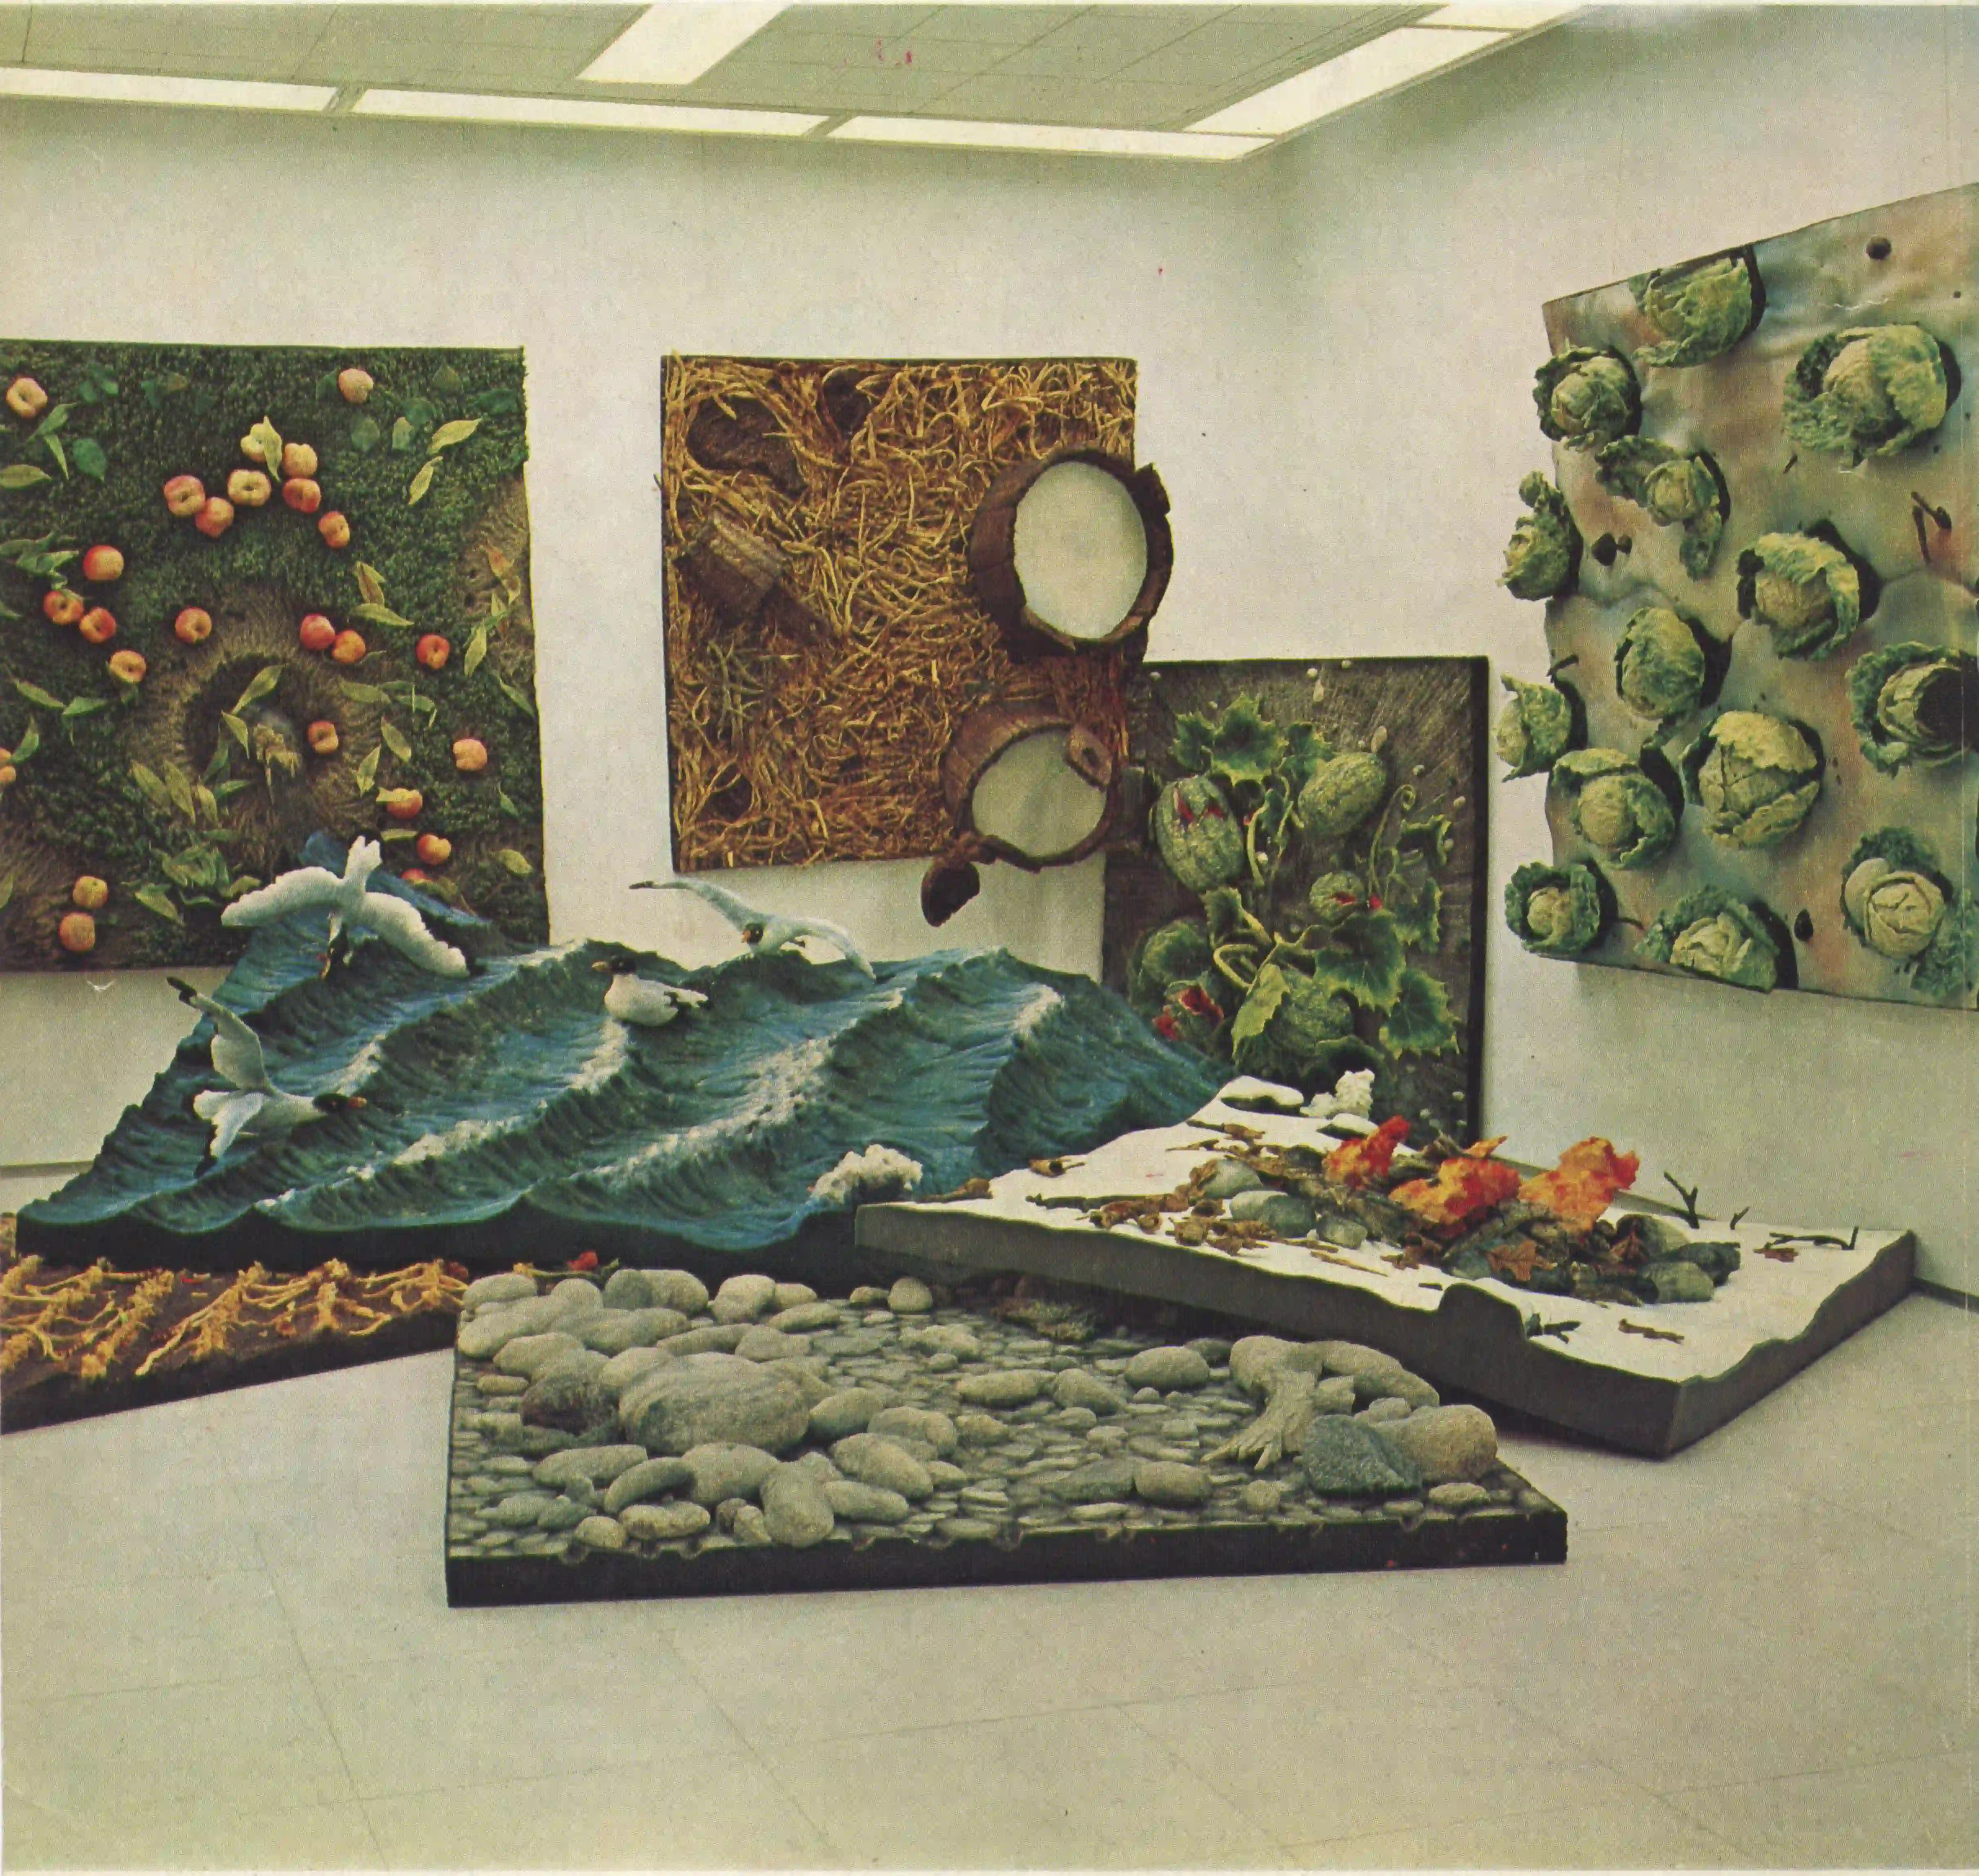 Galerie Ileana Sonnabend, Paris 1967